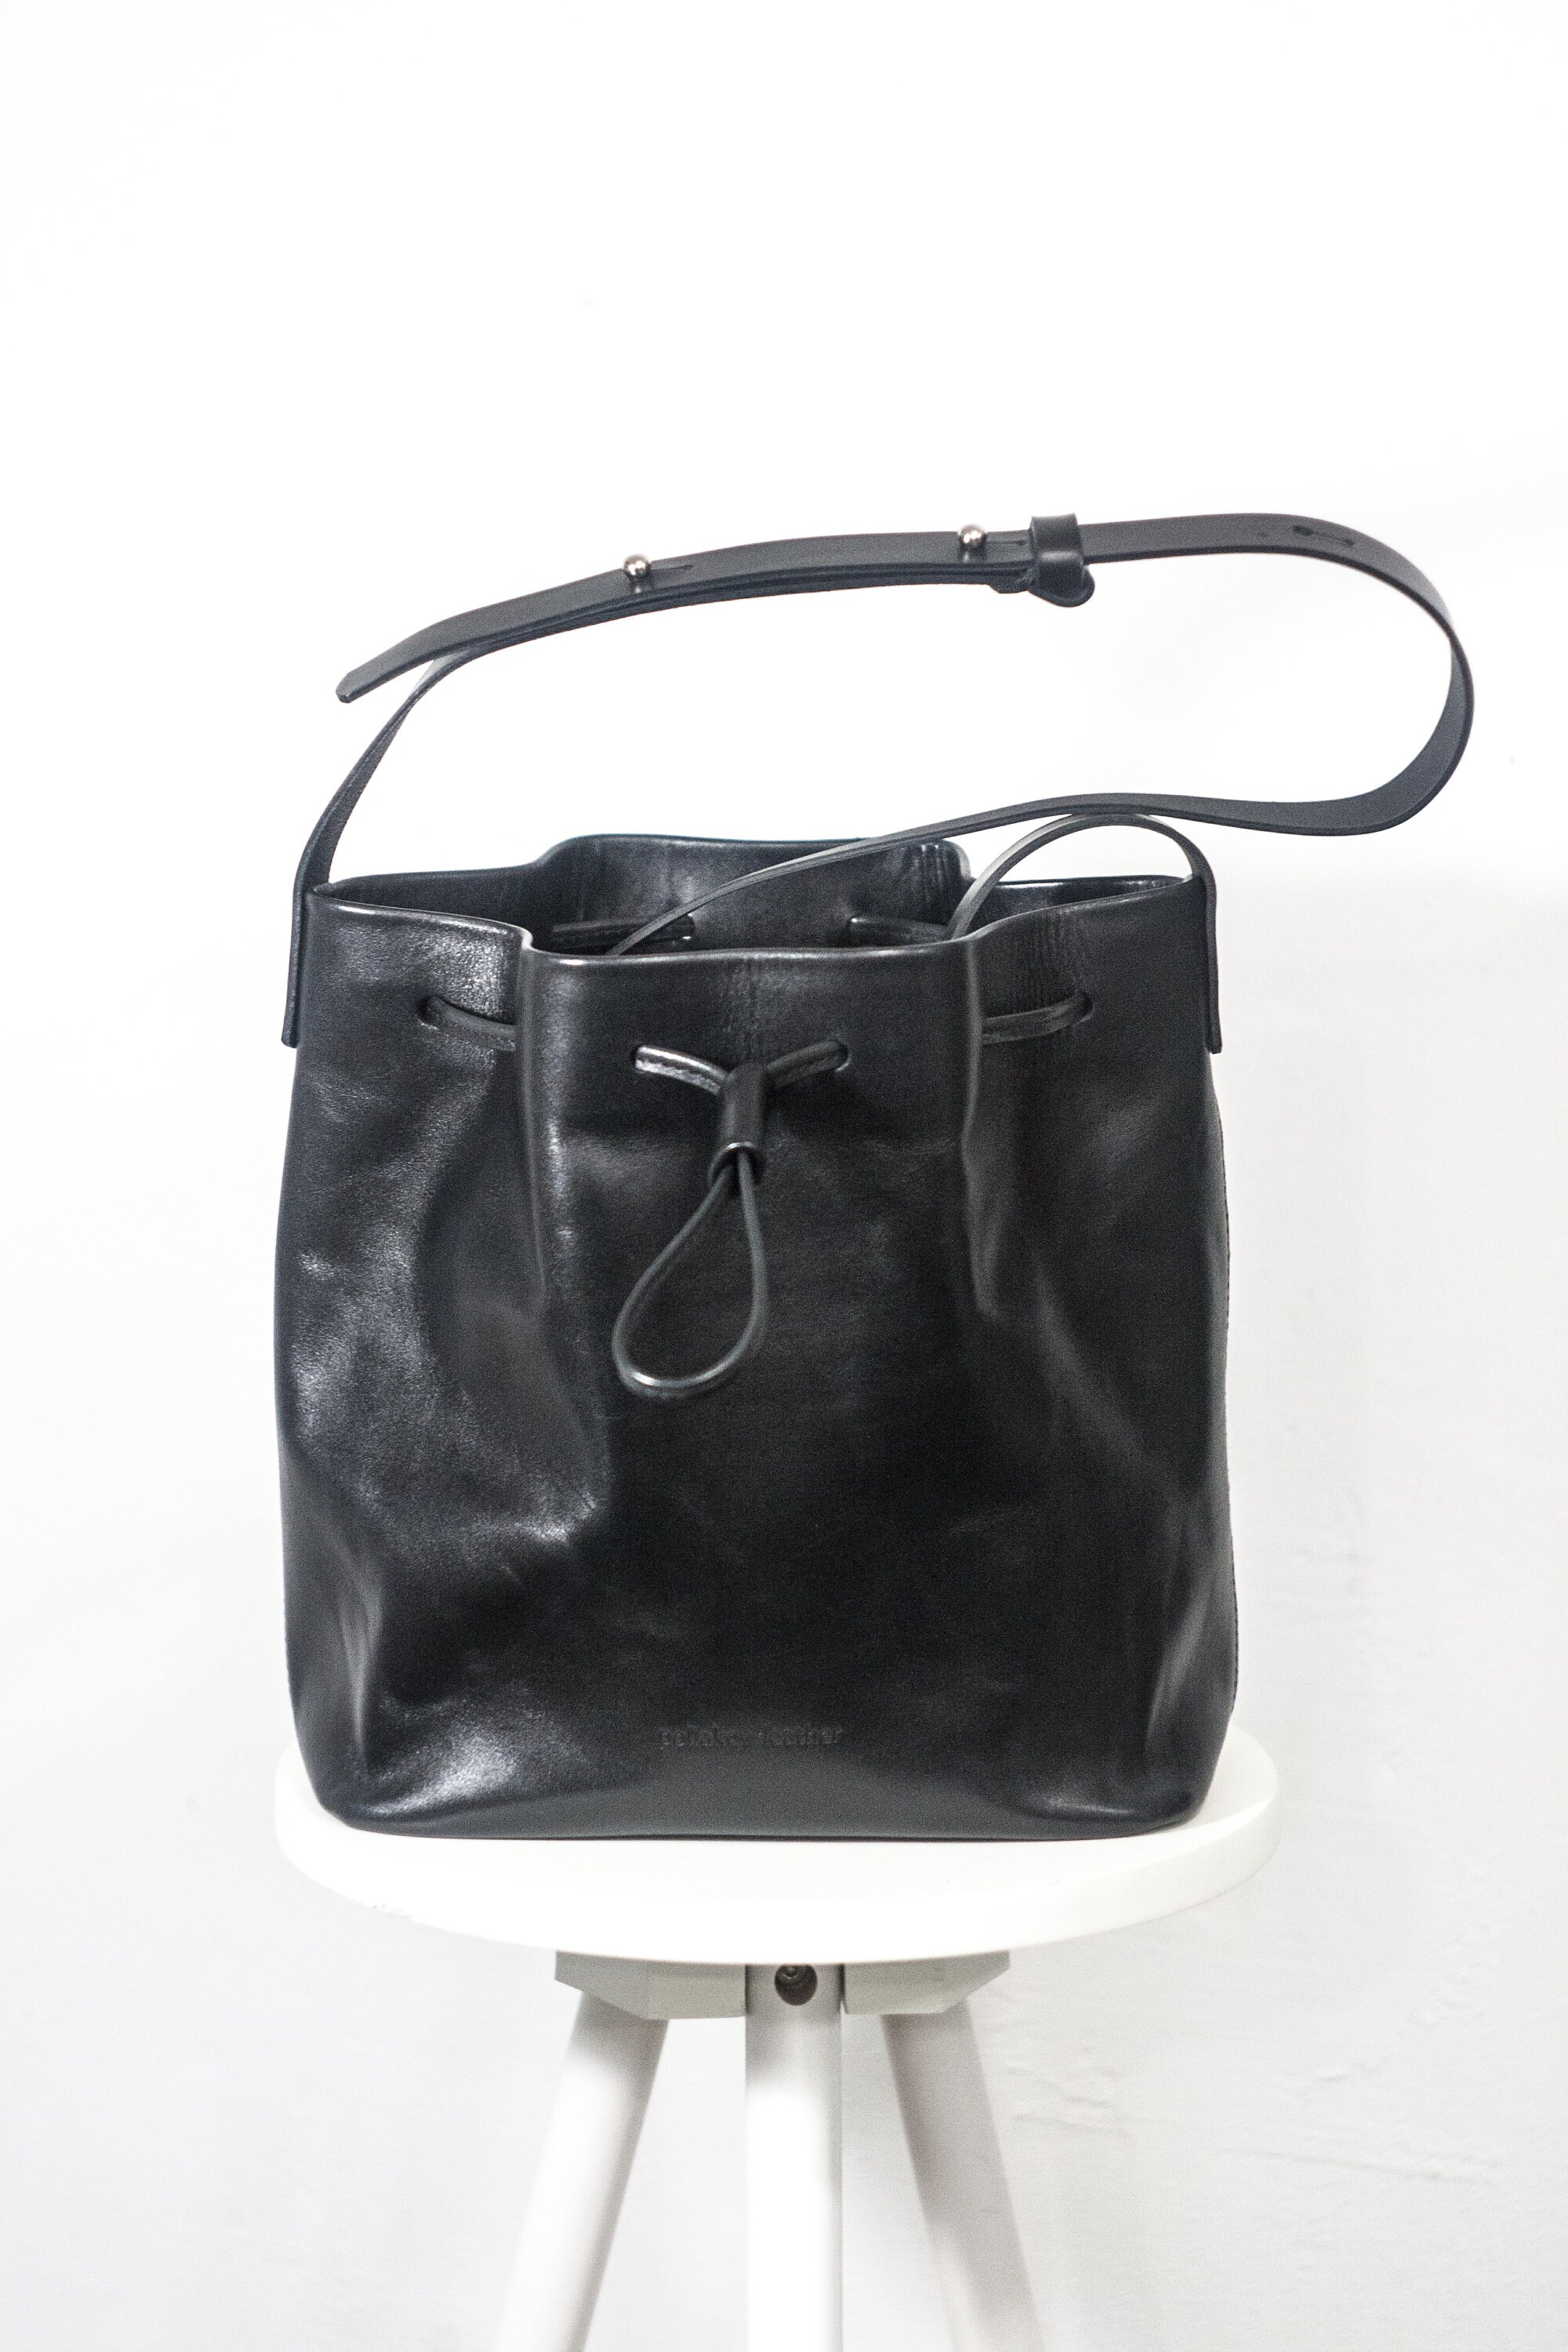 Bucket Bag Slouchy Leather Shoulder Bag Leather Purse | Etsy